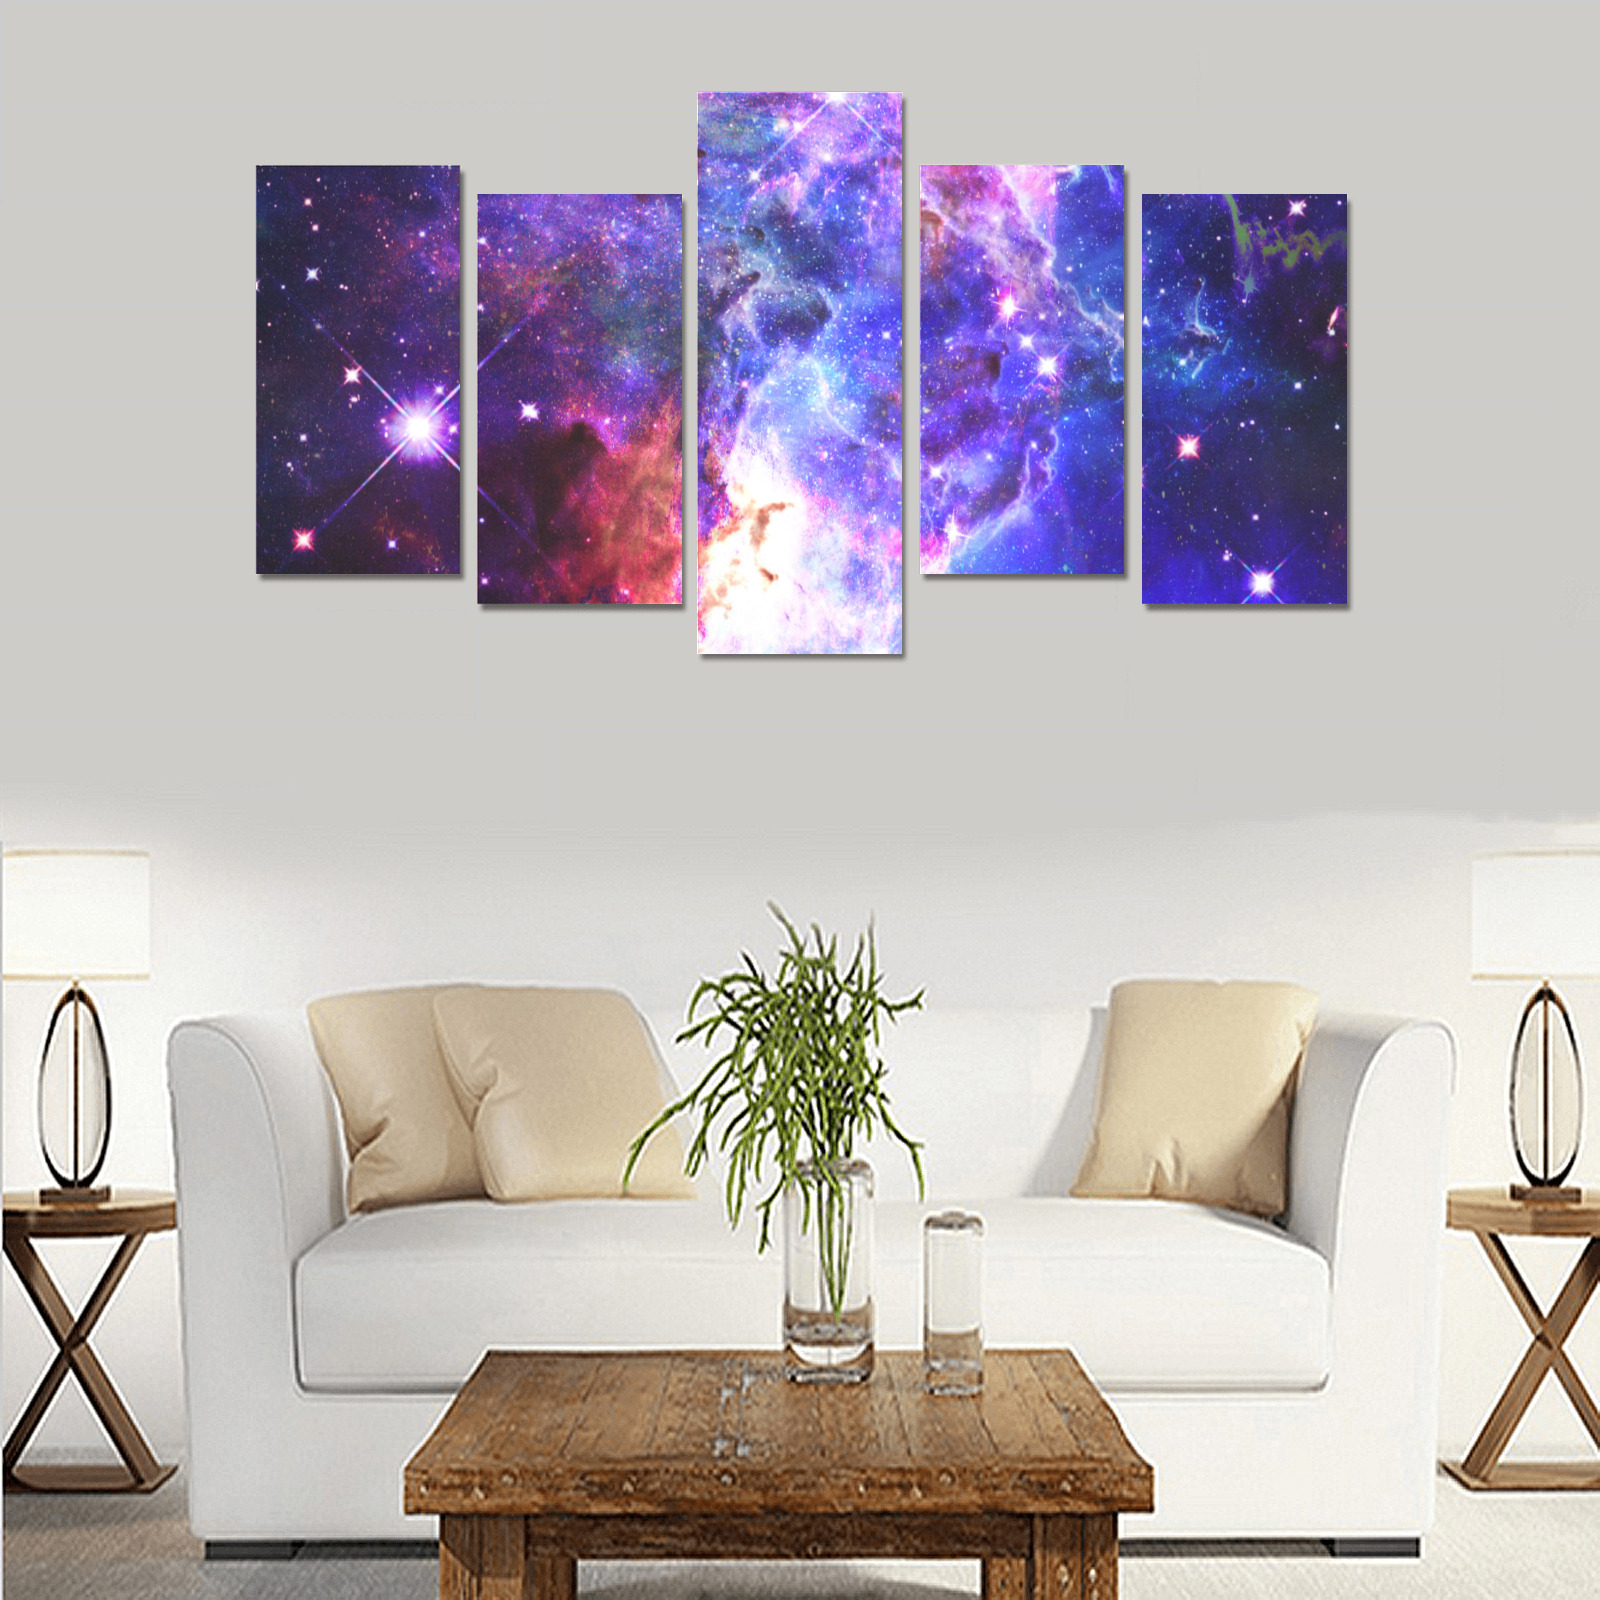 Mystical fantasy deep galaxy space - Interstellar cosmic dust Canvas Print Sets E (No Frame)